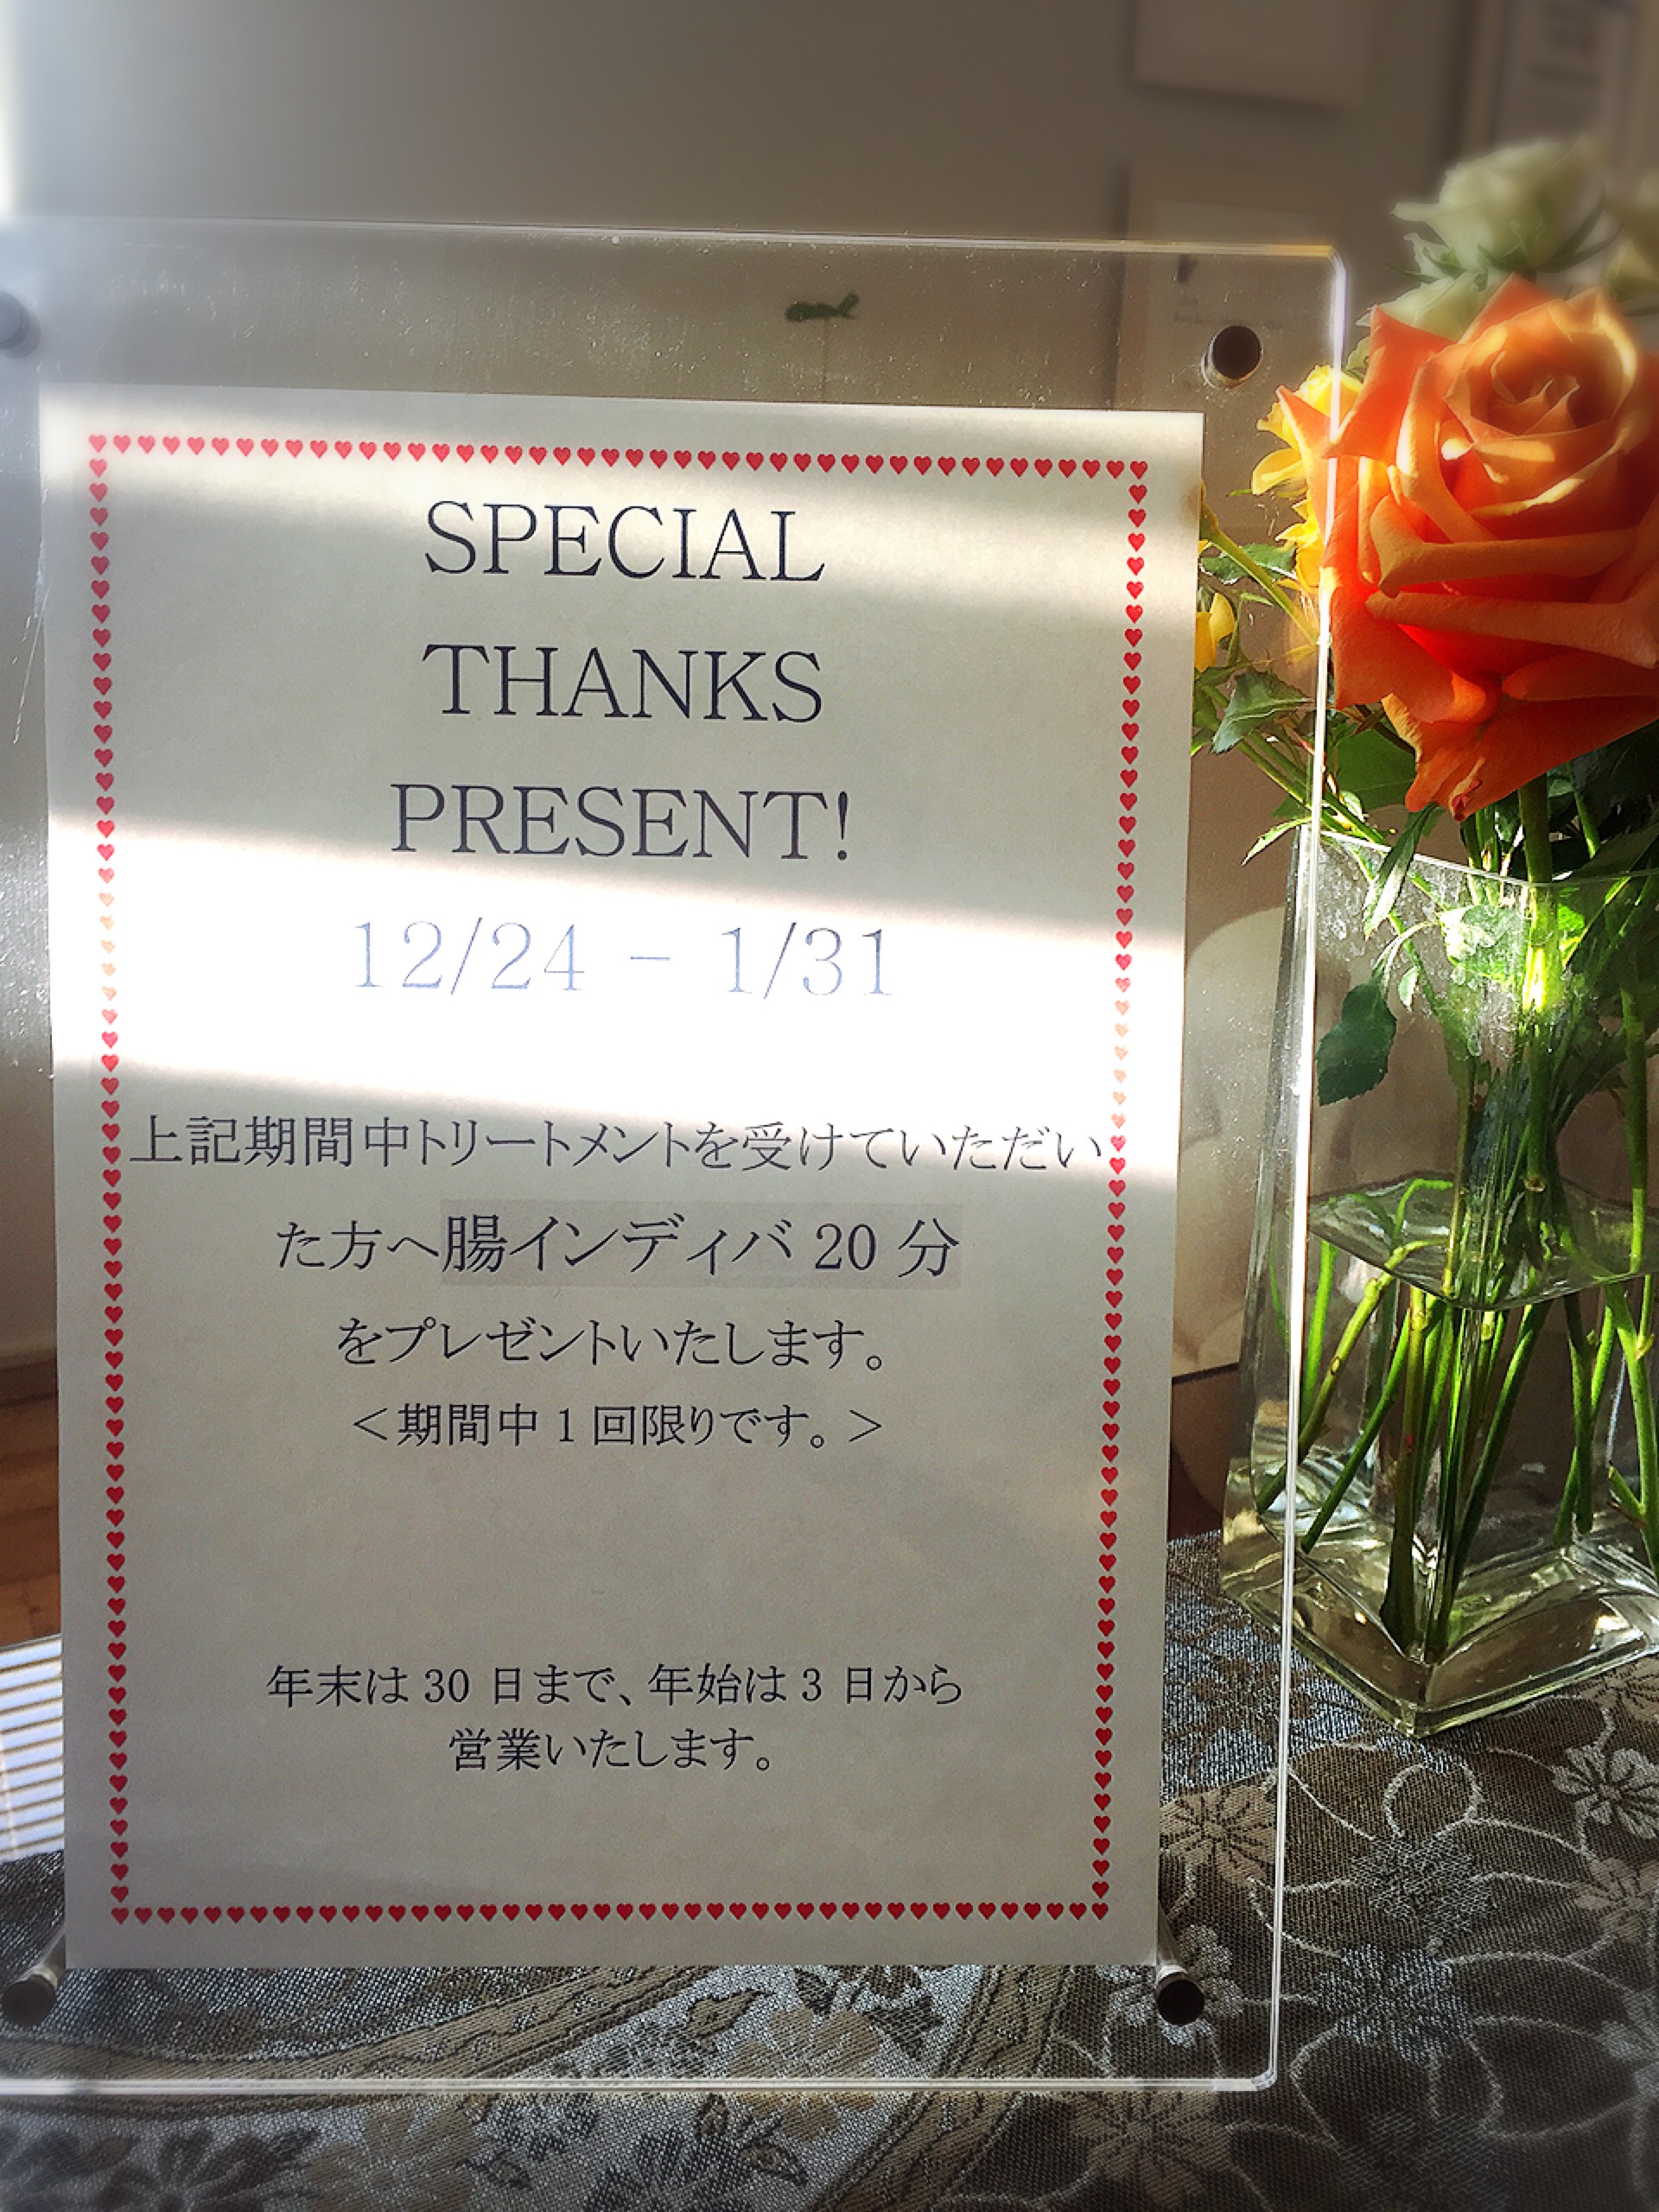 SAYU Chigasaki Salonではただ今スペシャルサンクスプレゼント、腸インディバをプレゼントしています。